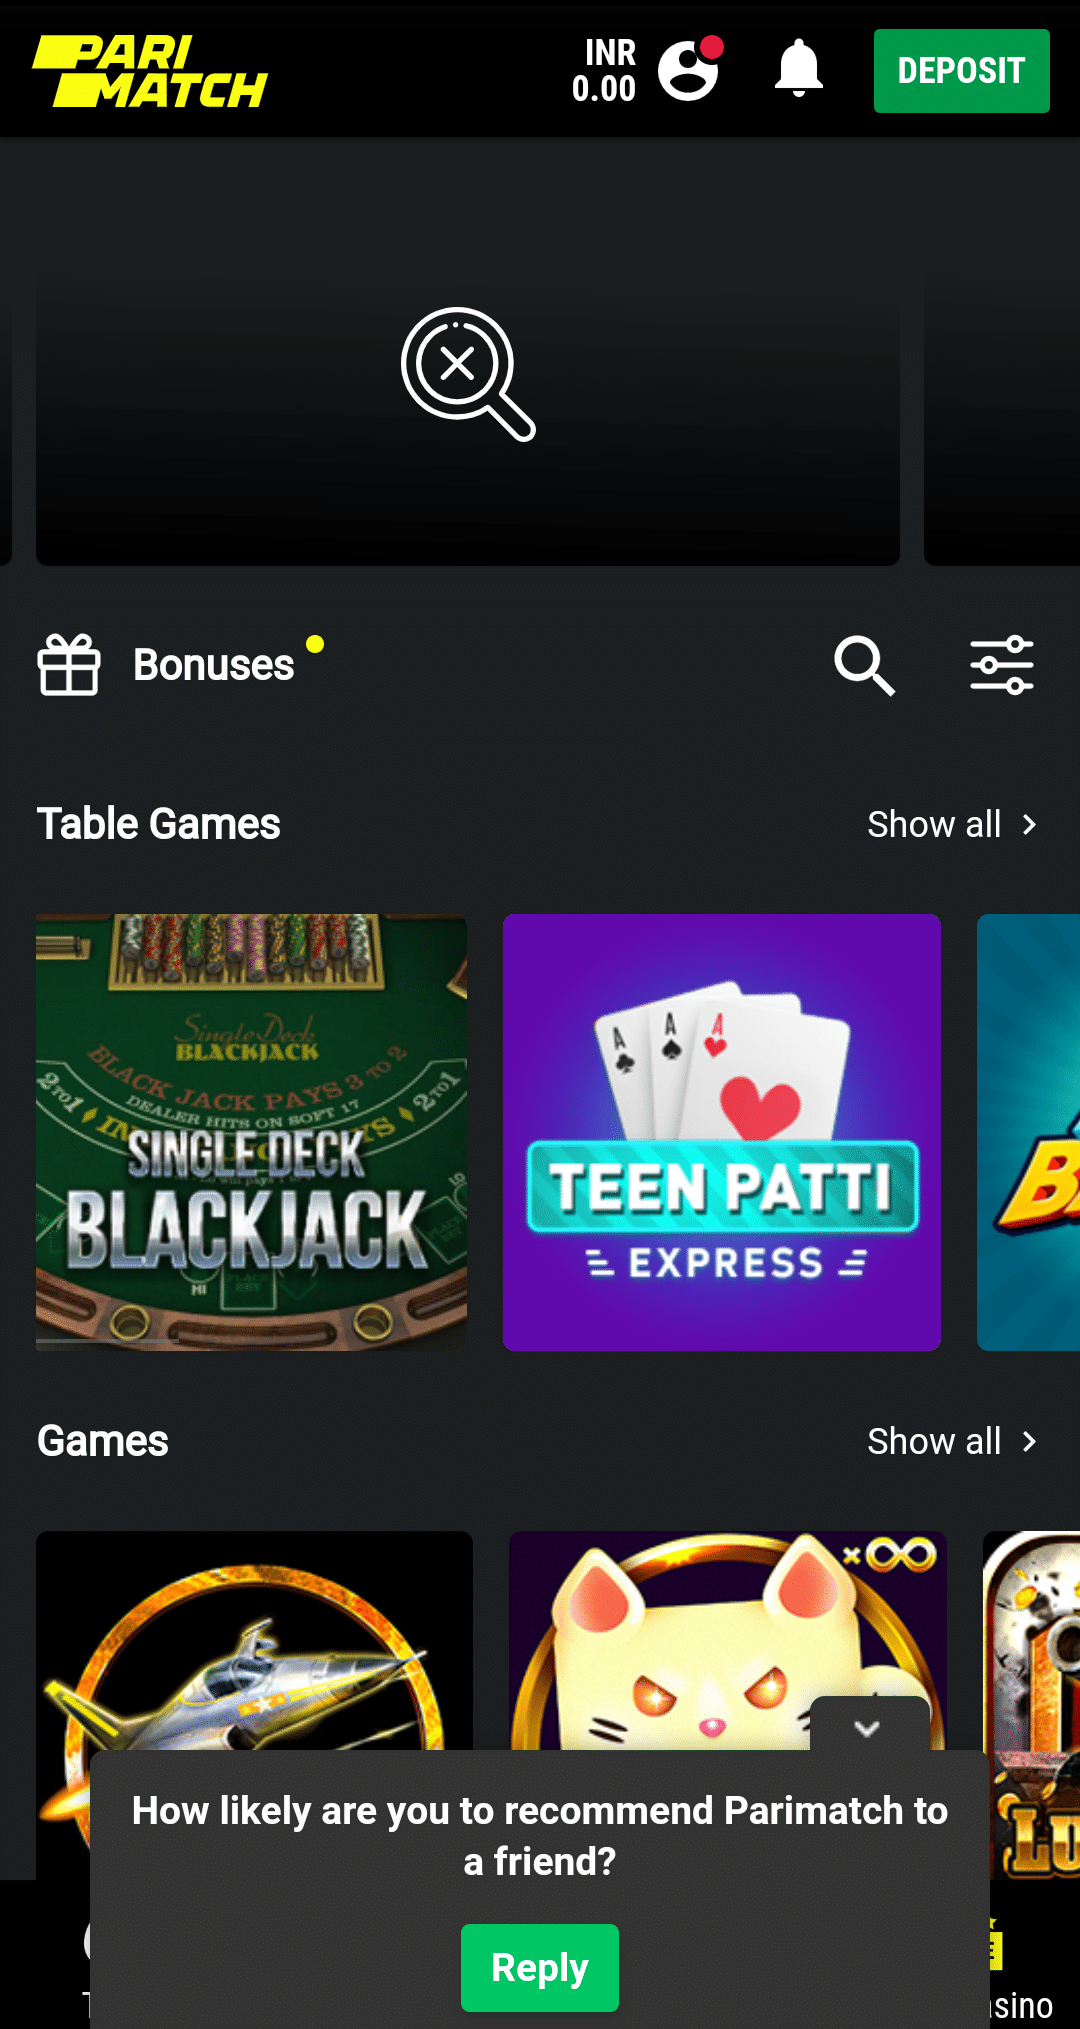 Parimatch online casino interface on mobile